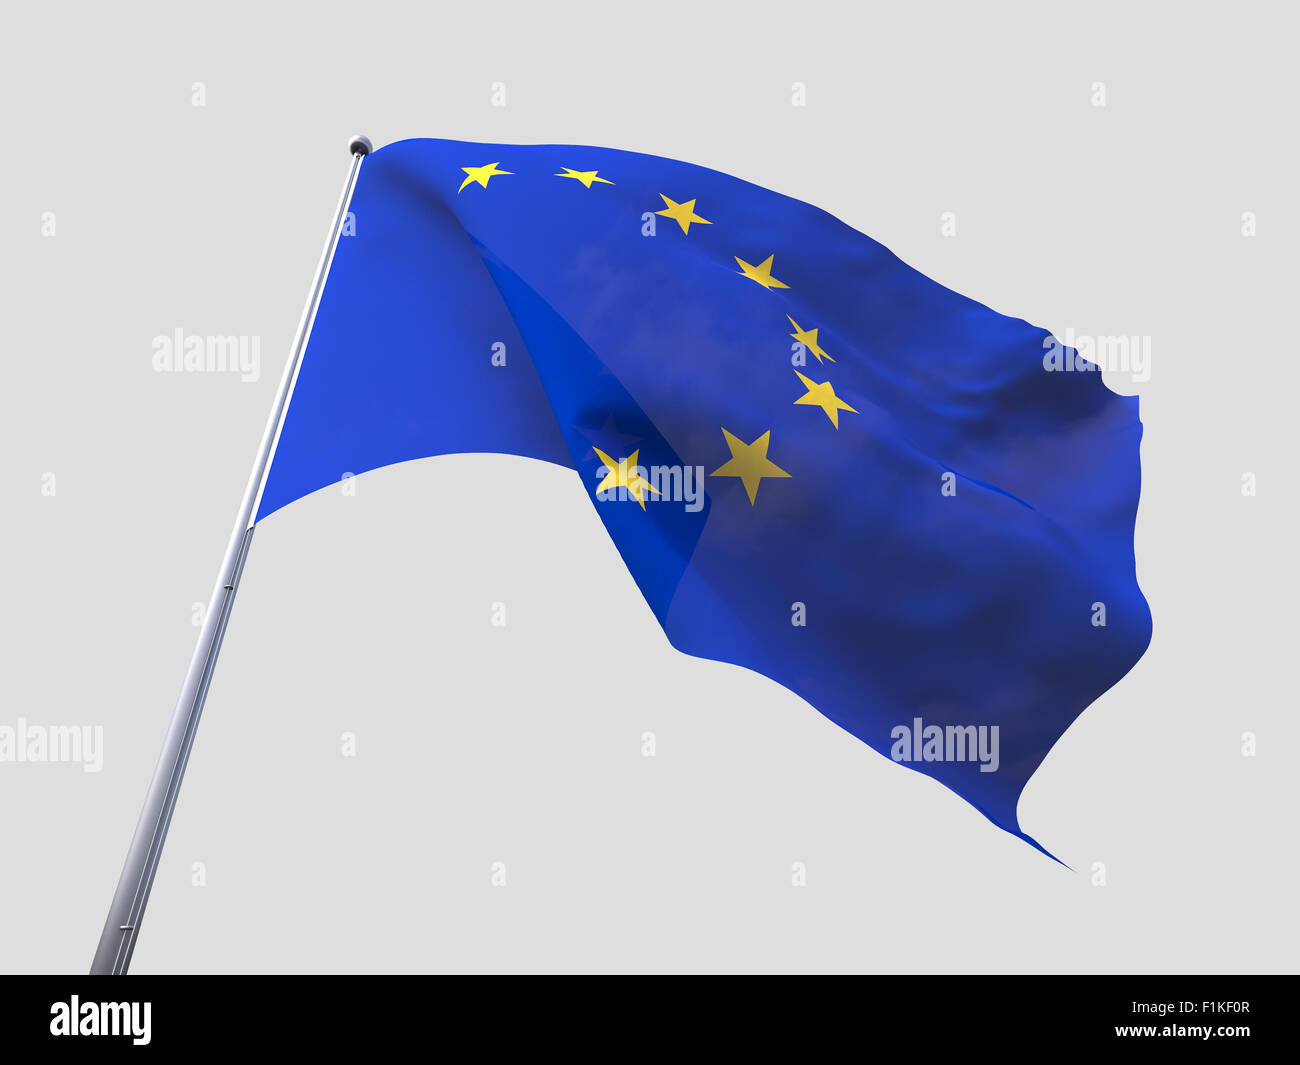 European Union flying flag isolate on white background. Stock Photo